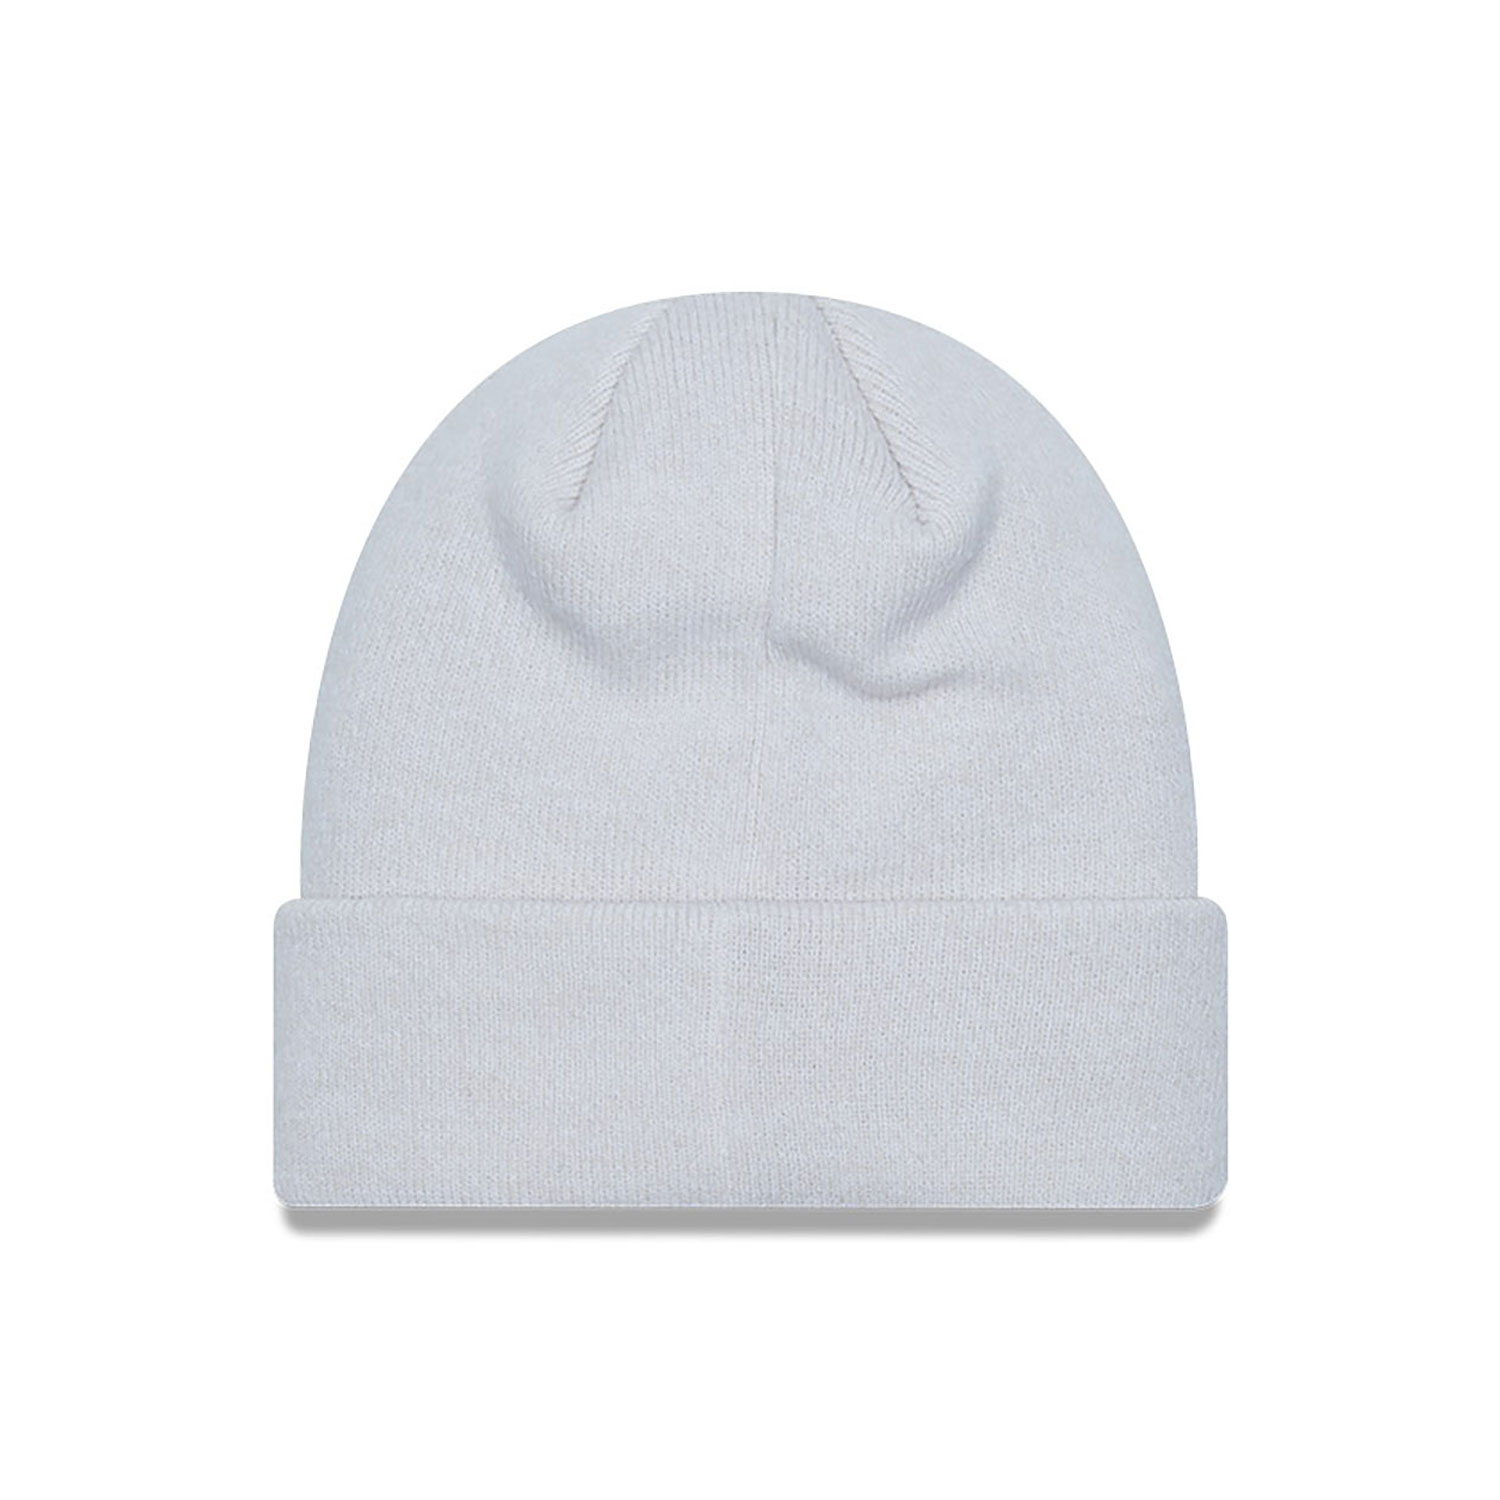 LA Dodgers Team White Cuff Knit Beanie Hat